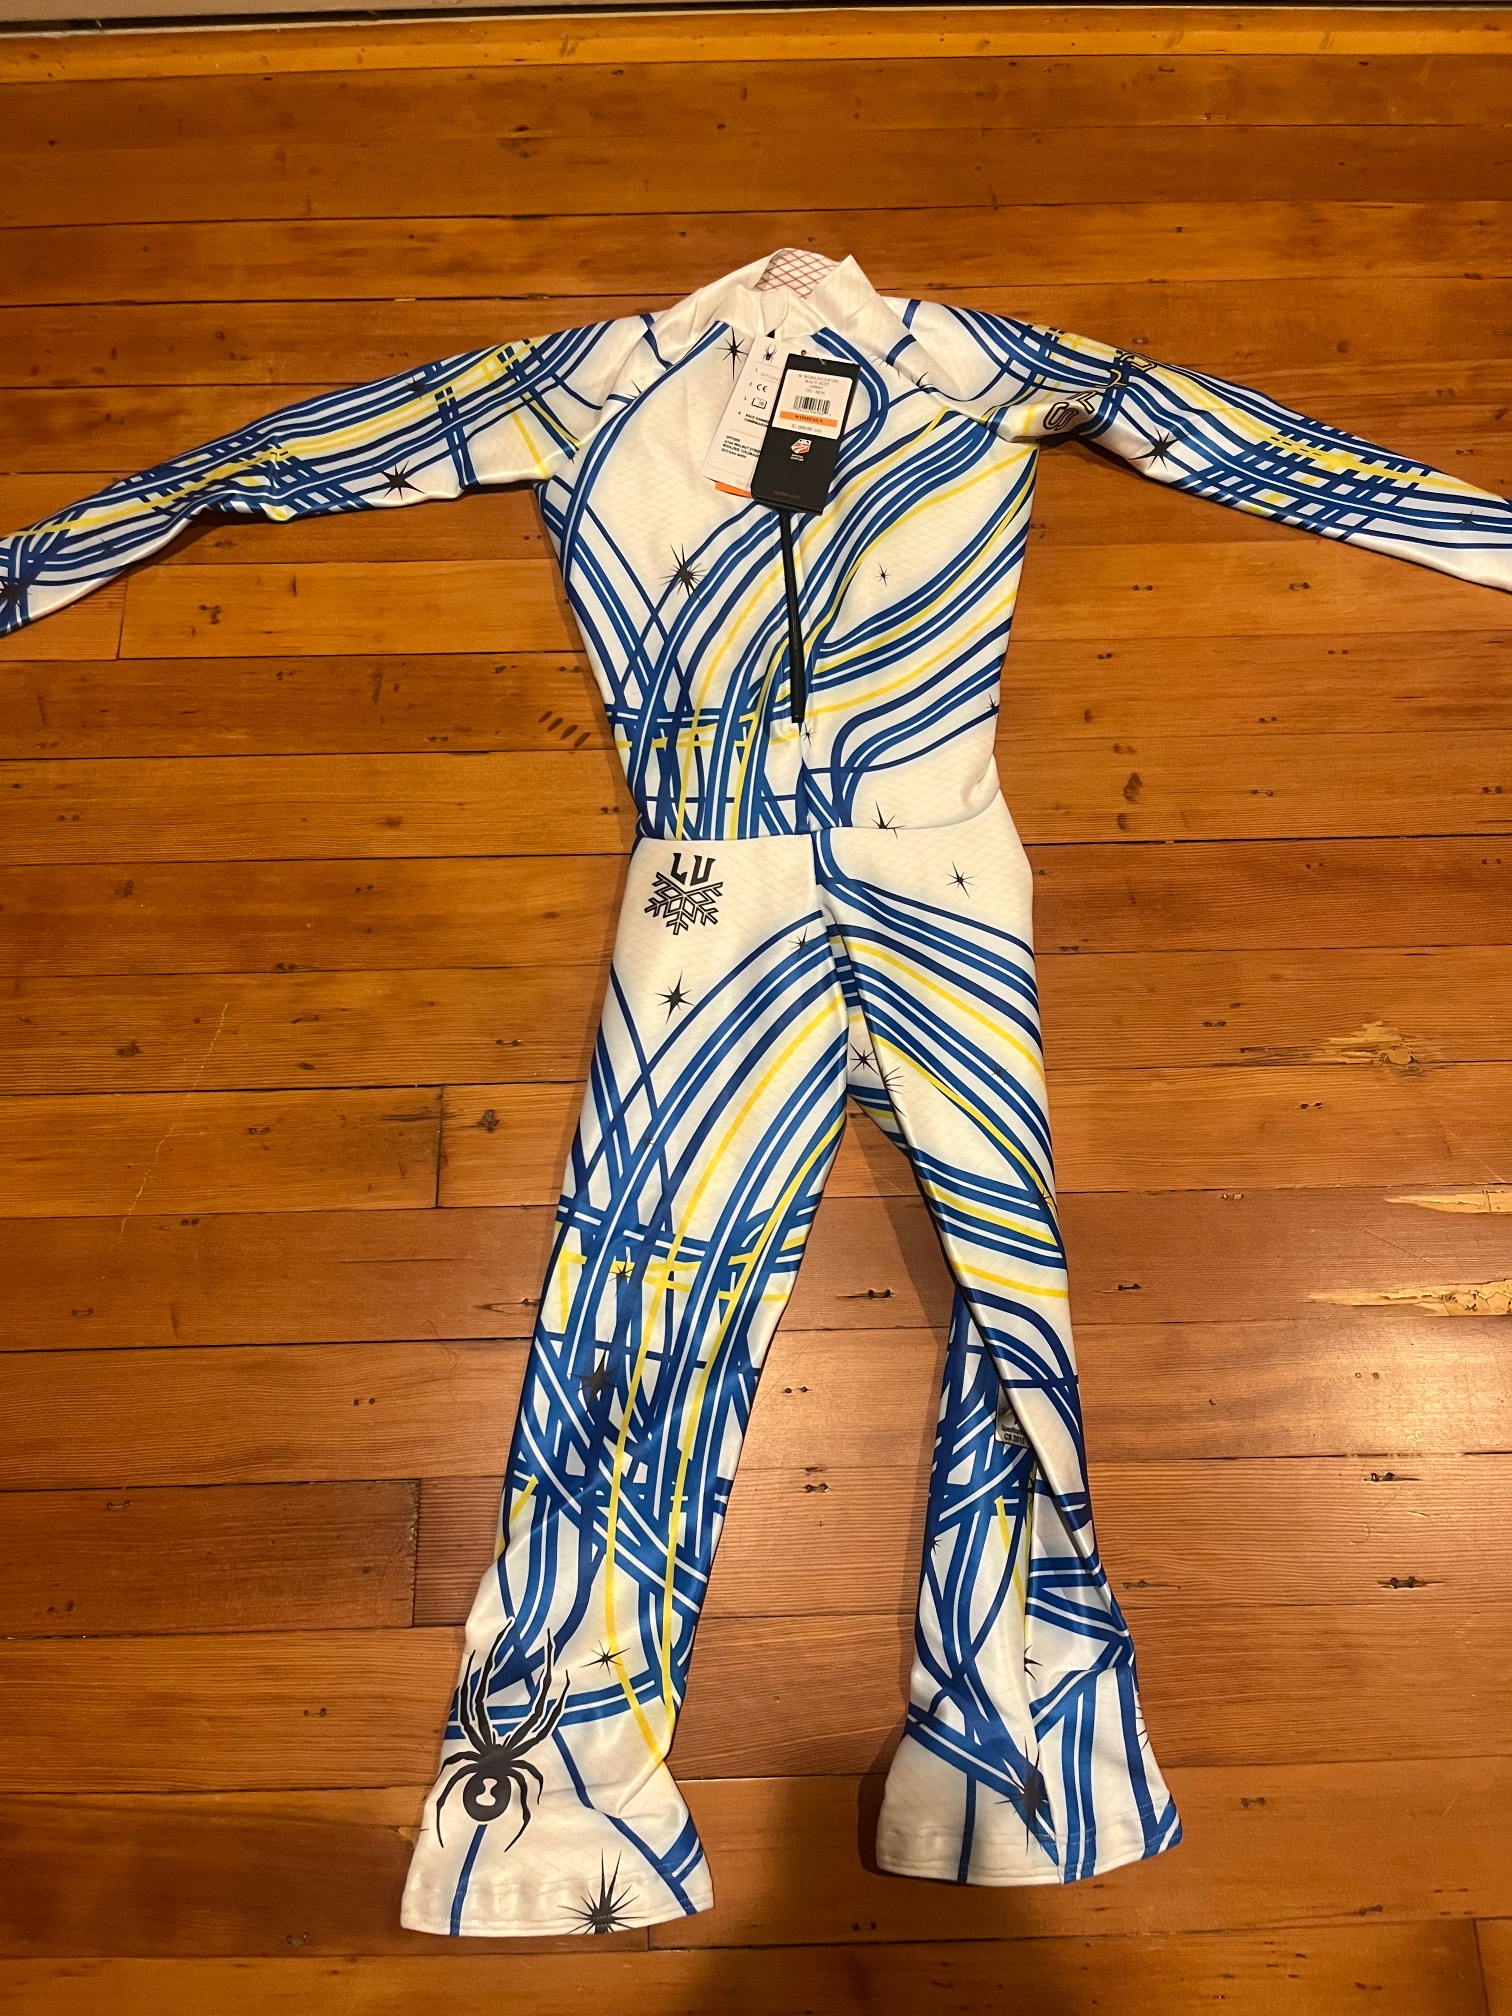 Spyder US Ski Team Lindsay Vonn World Cup Downhill Race Suit Unpadded Large